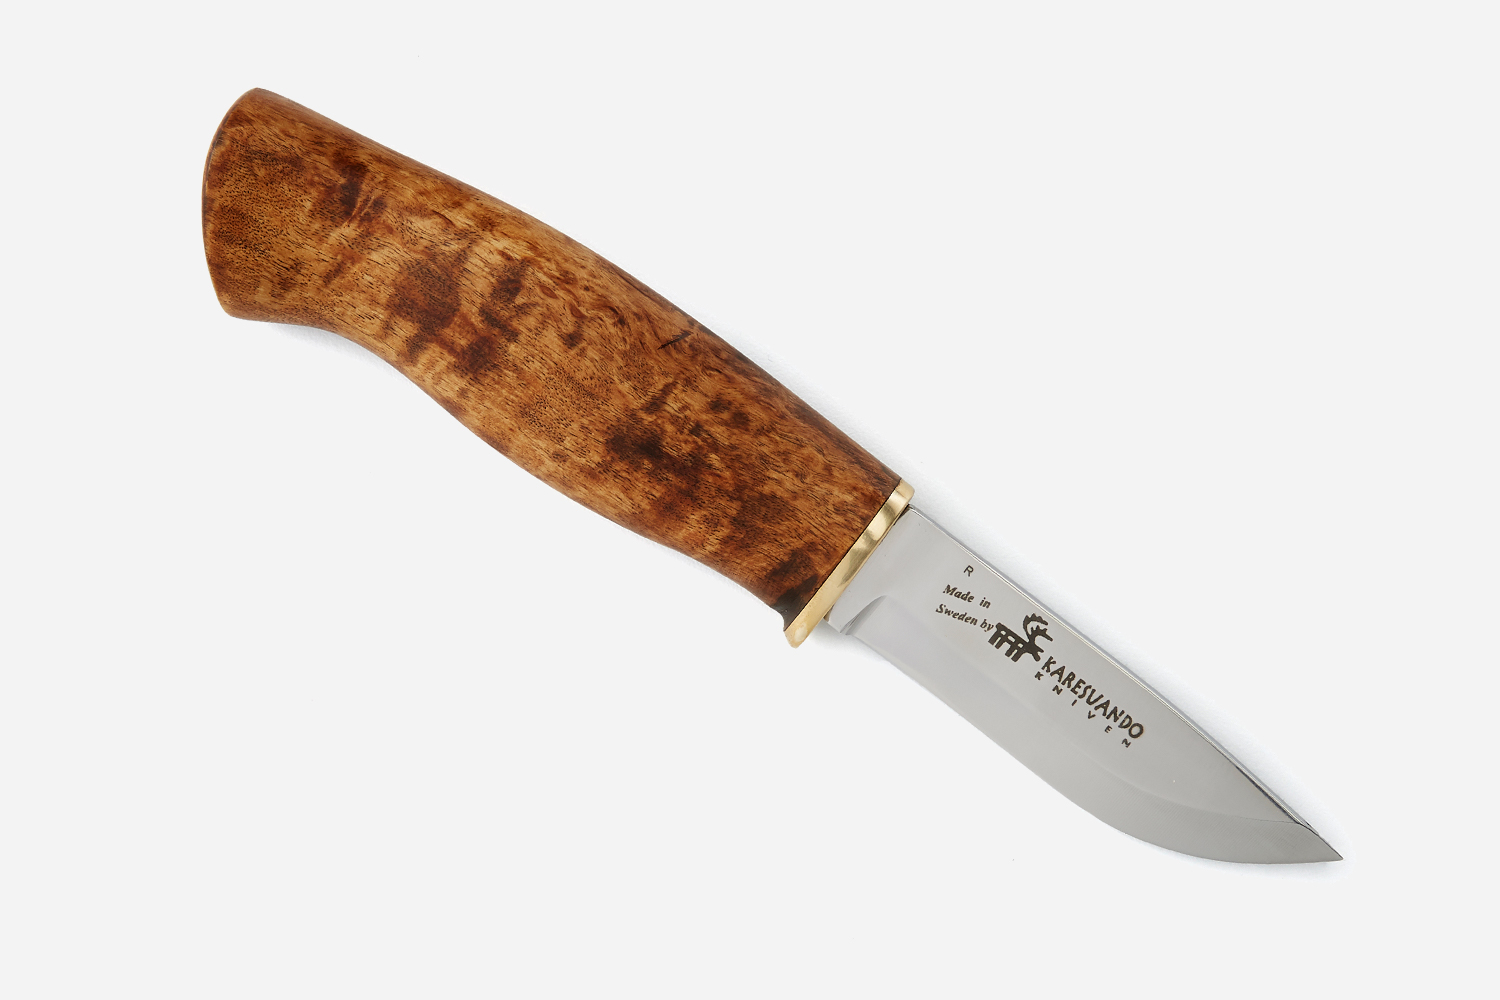 Karesuando Knive kit 105 (Knivsats) 3527  Advantageously shopping at